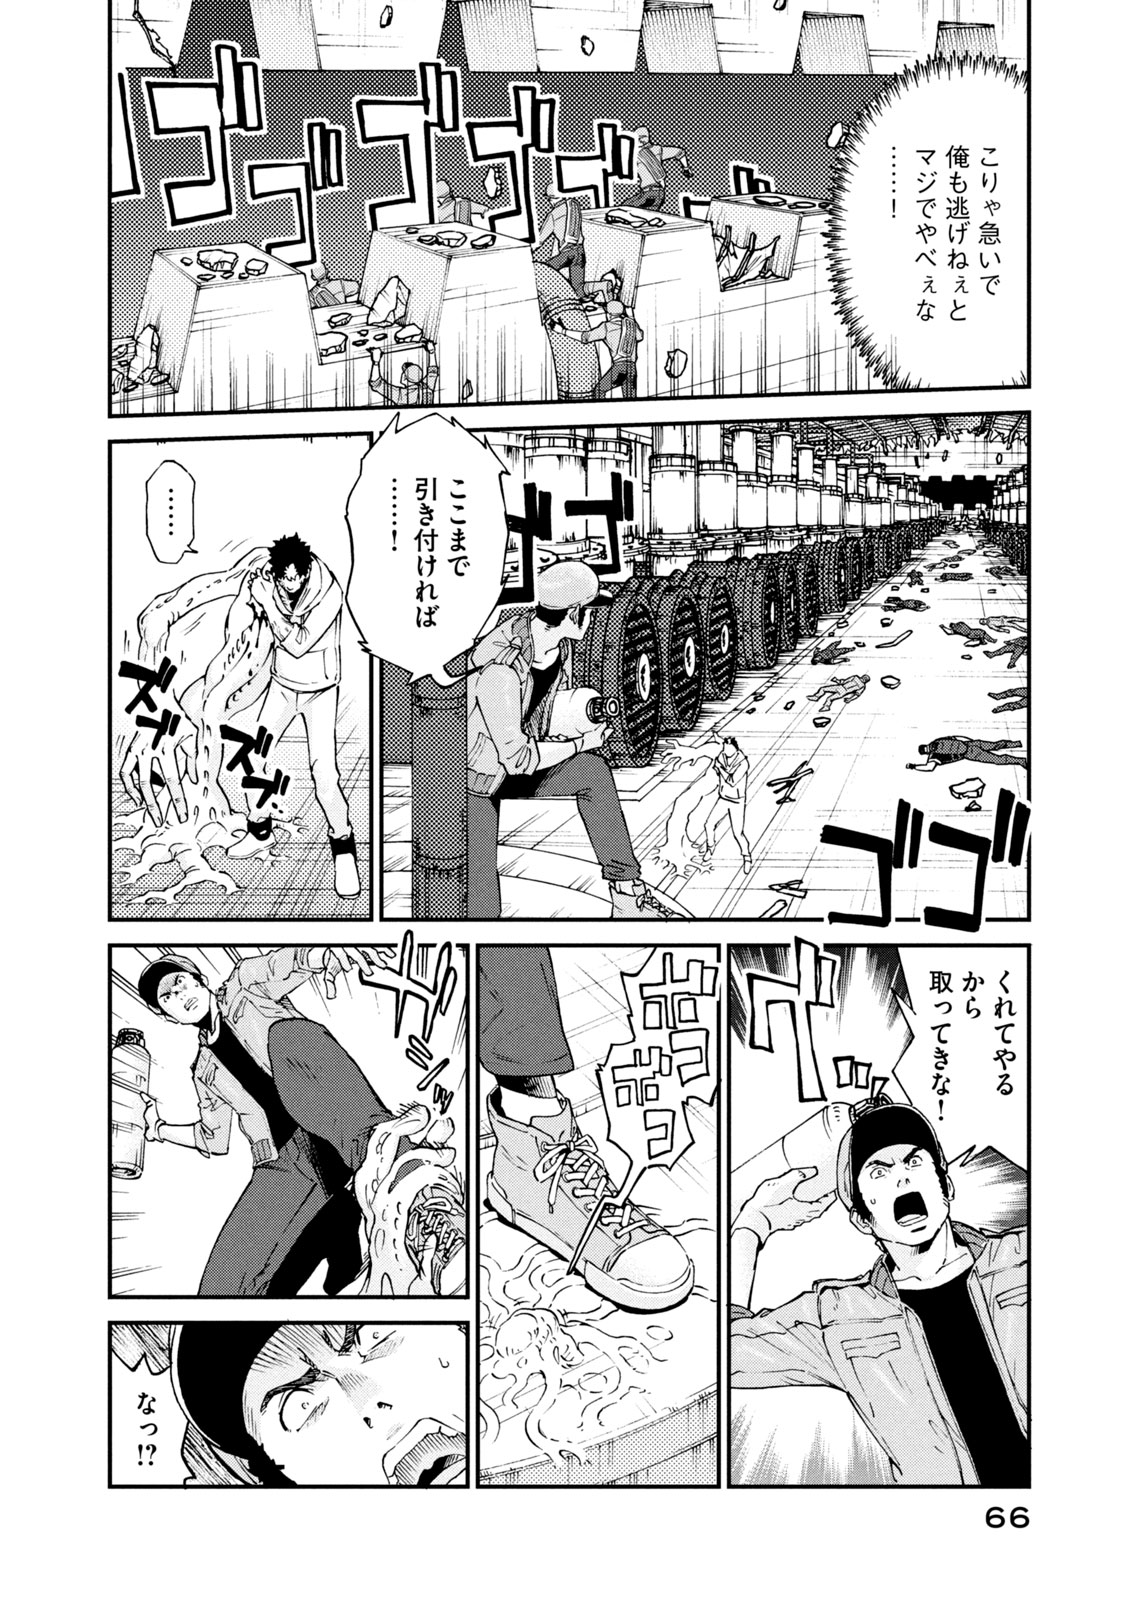 Hataraku Saibou BLACK - Chapter 39 - Page 4